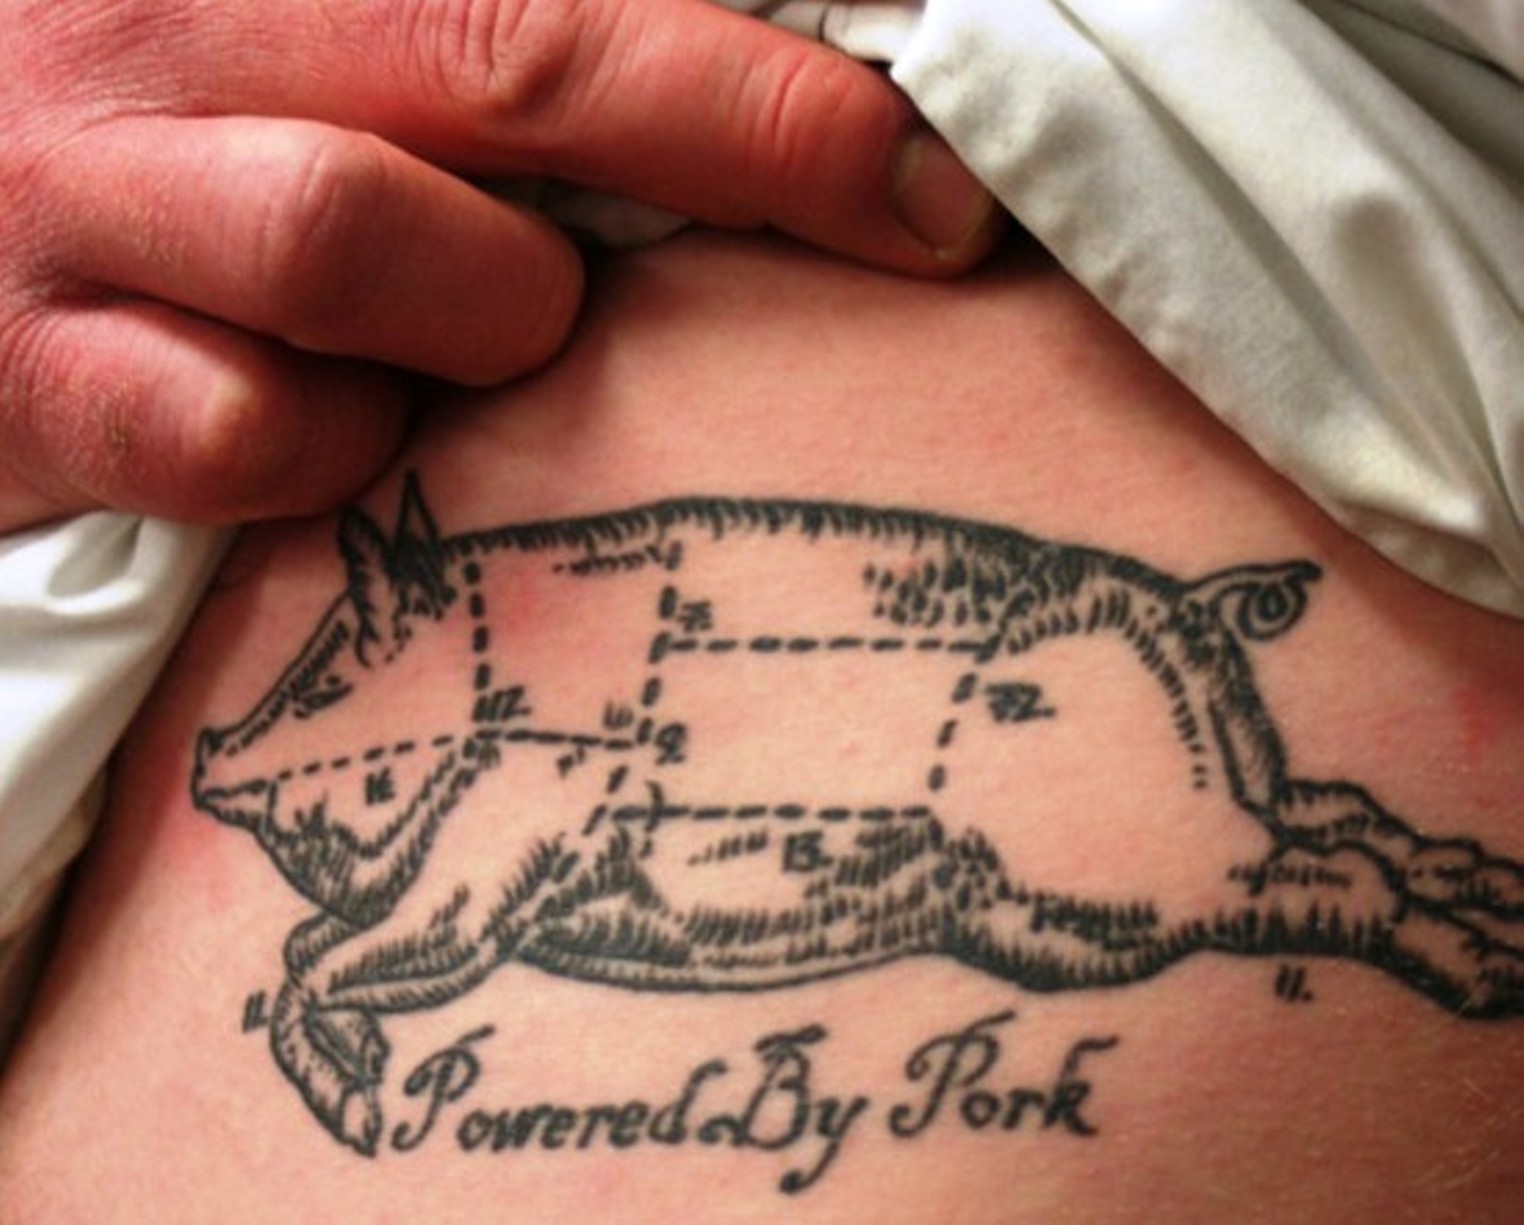 Gallery: 25 weird and wonderful vegan tattoos | Totally Vegan Buzz